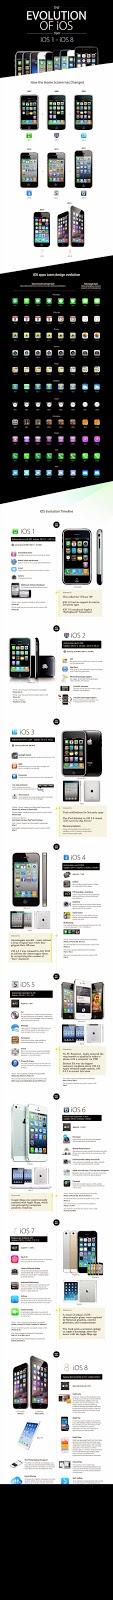 Evolución del iOS #Infografías #Avances #Tecnología